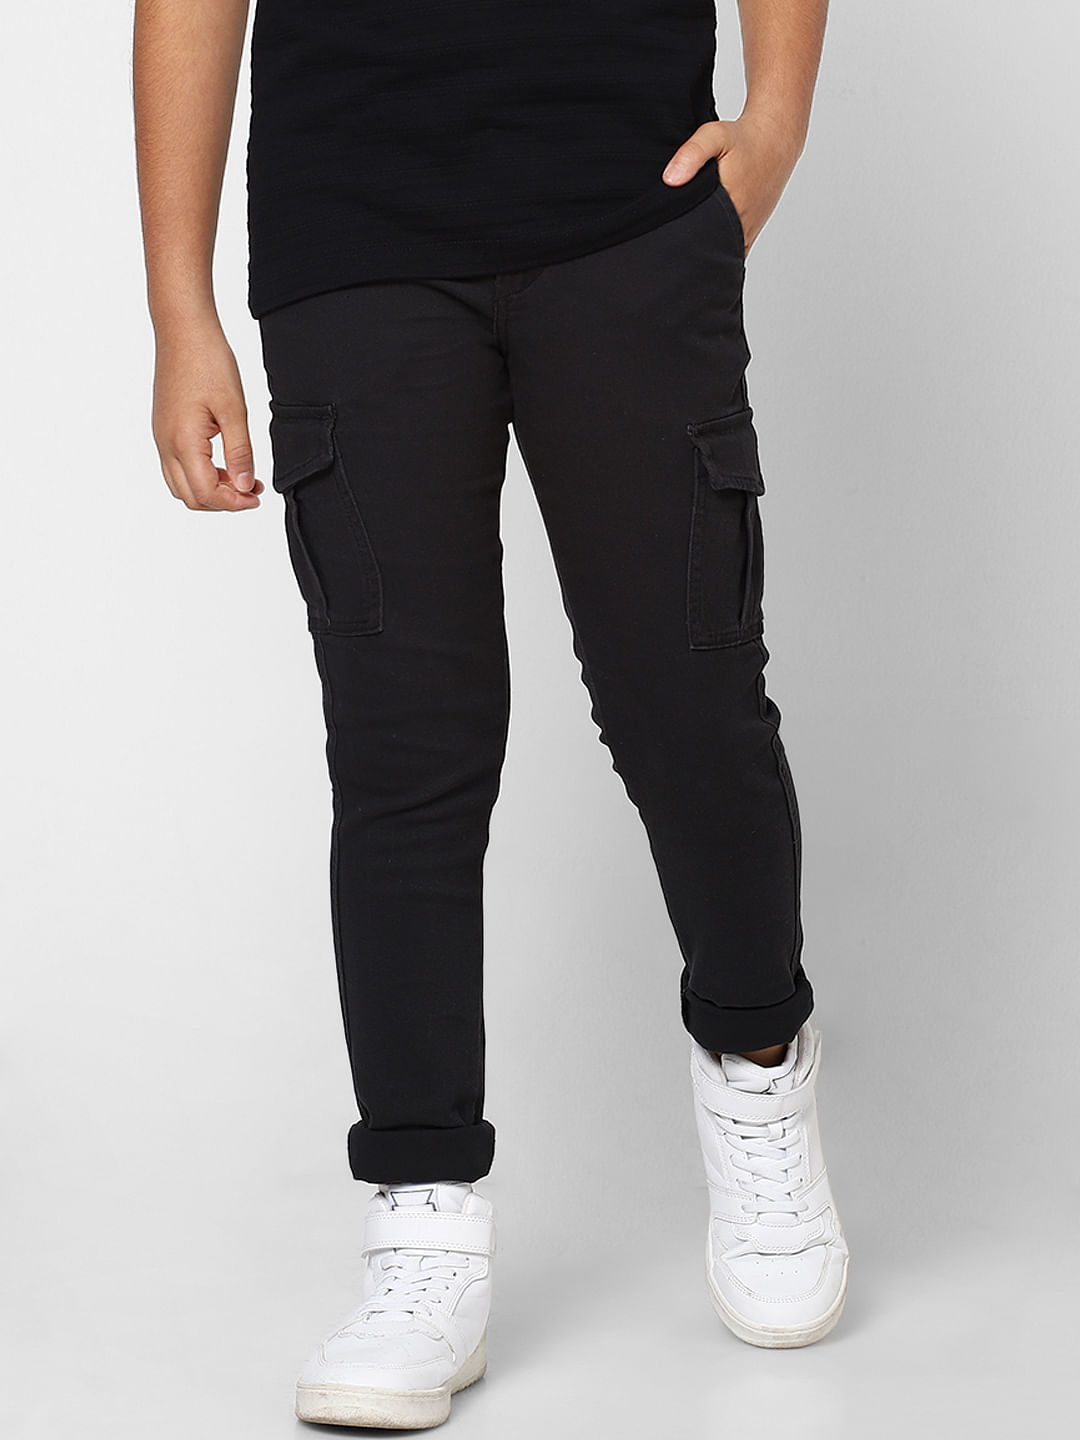 Buy Black Mid Rise Slim Fit Pants for Men Online at SELECTED HOMME  |156337801